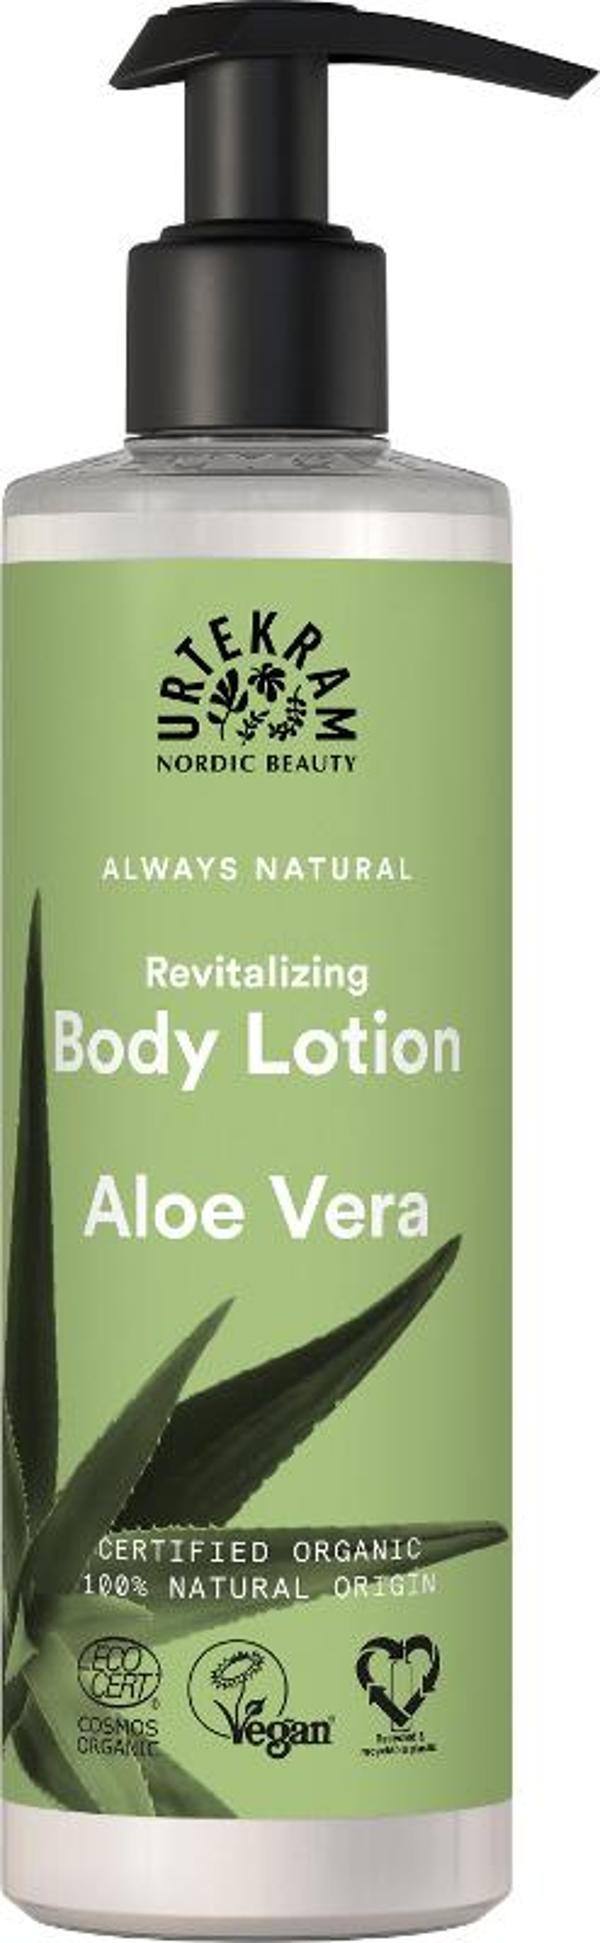 Produktfoto zu Revitalizing Body Lotion Aloe